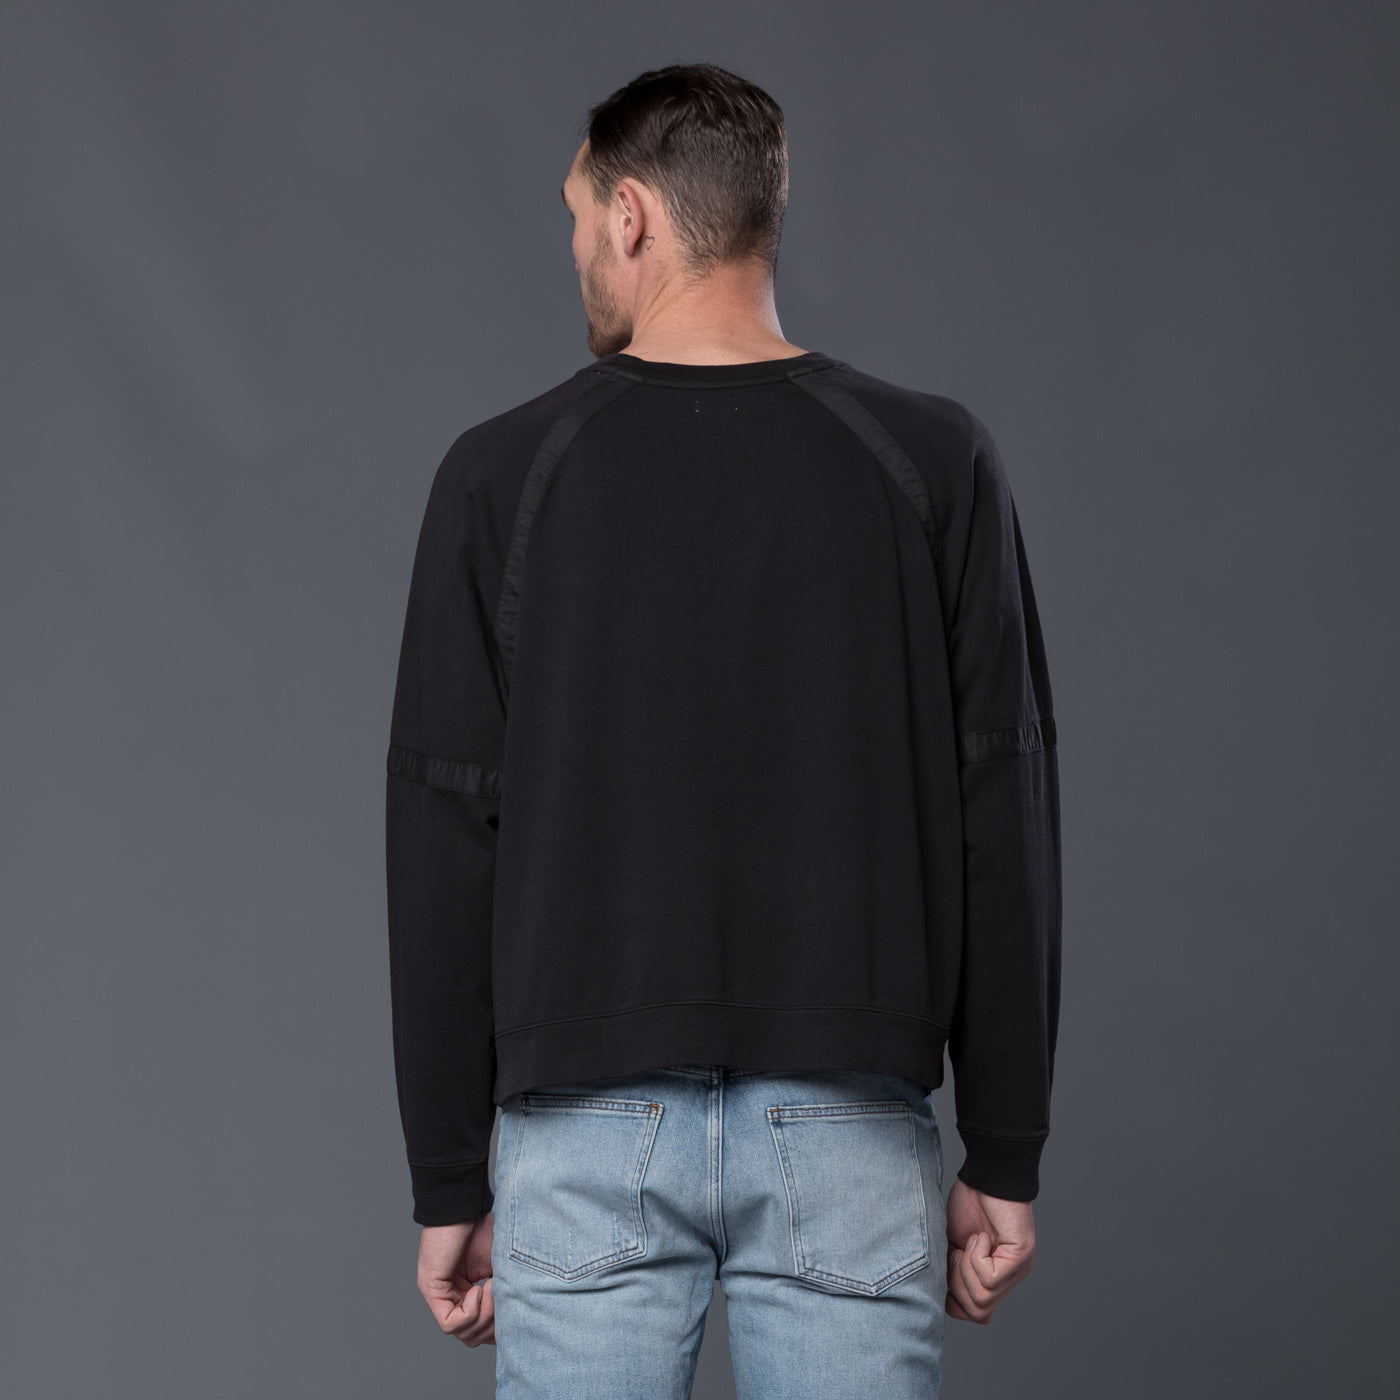 Willy Chavarria Black Sweatshirt